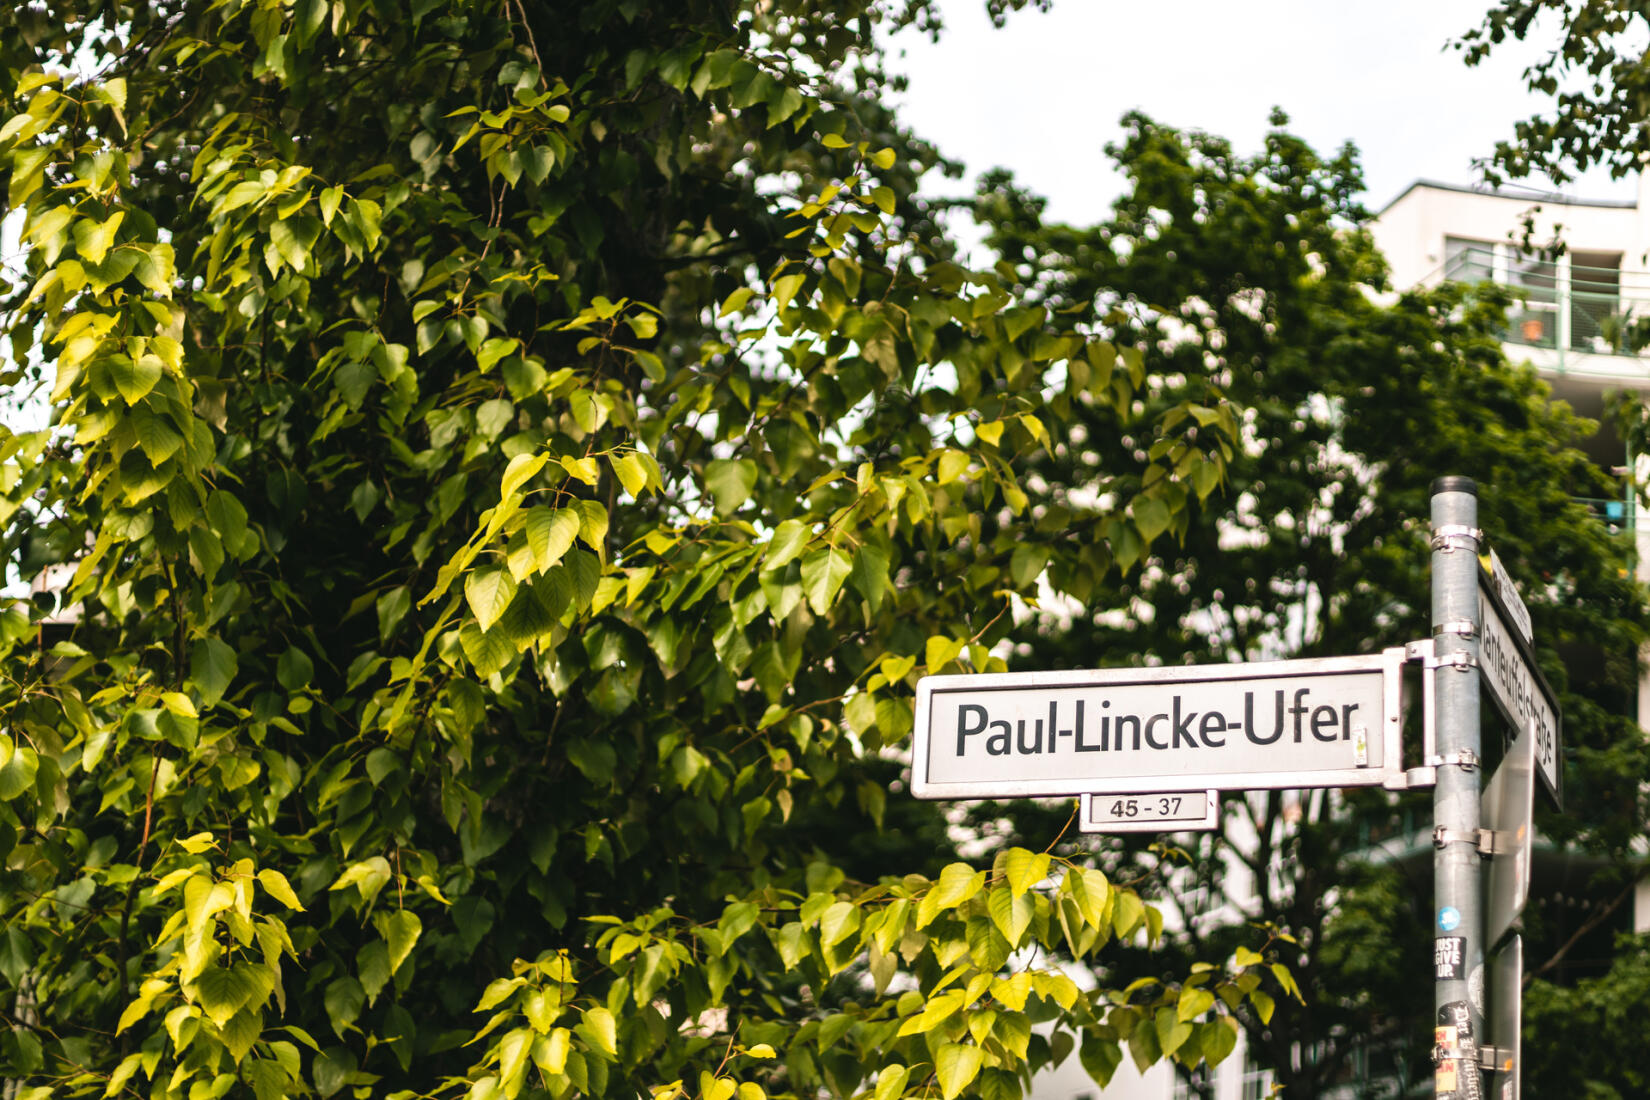 Paul-Lincke-Ufer